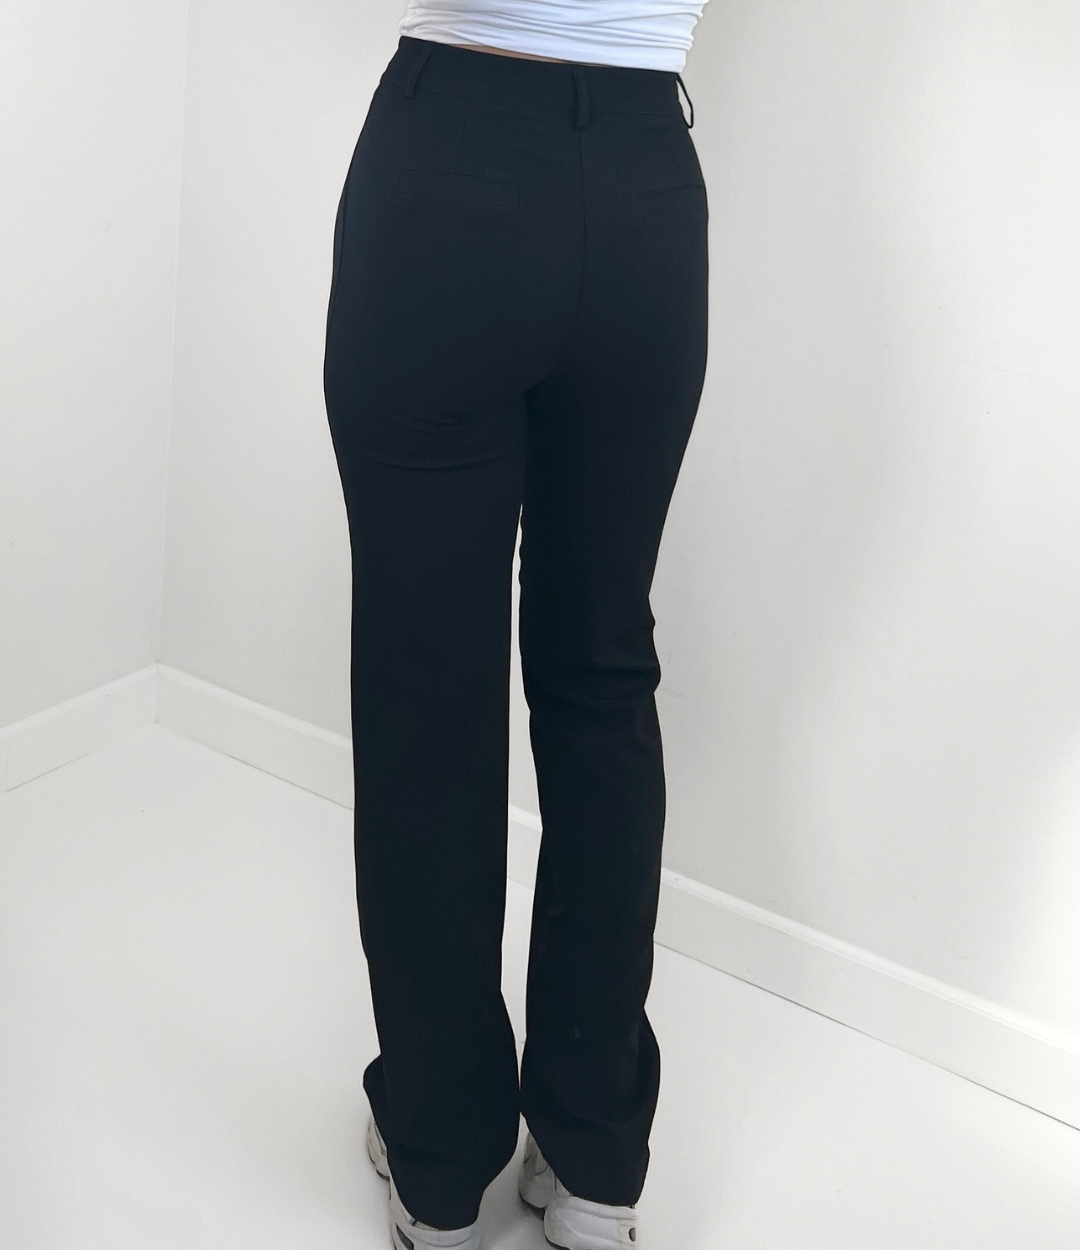 Molly pants | Tall | Black